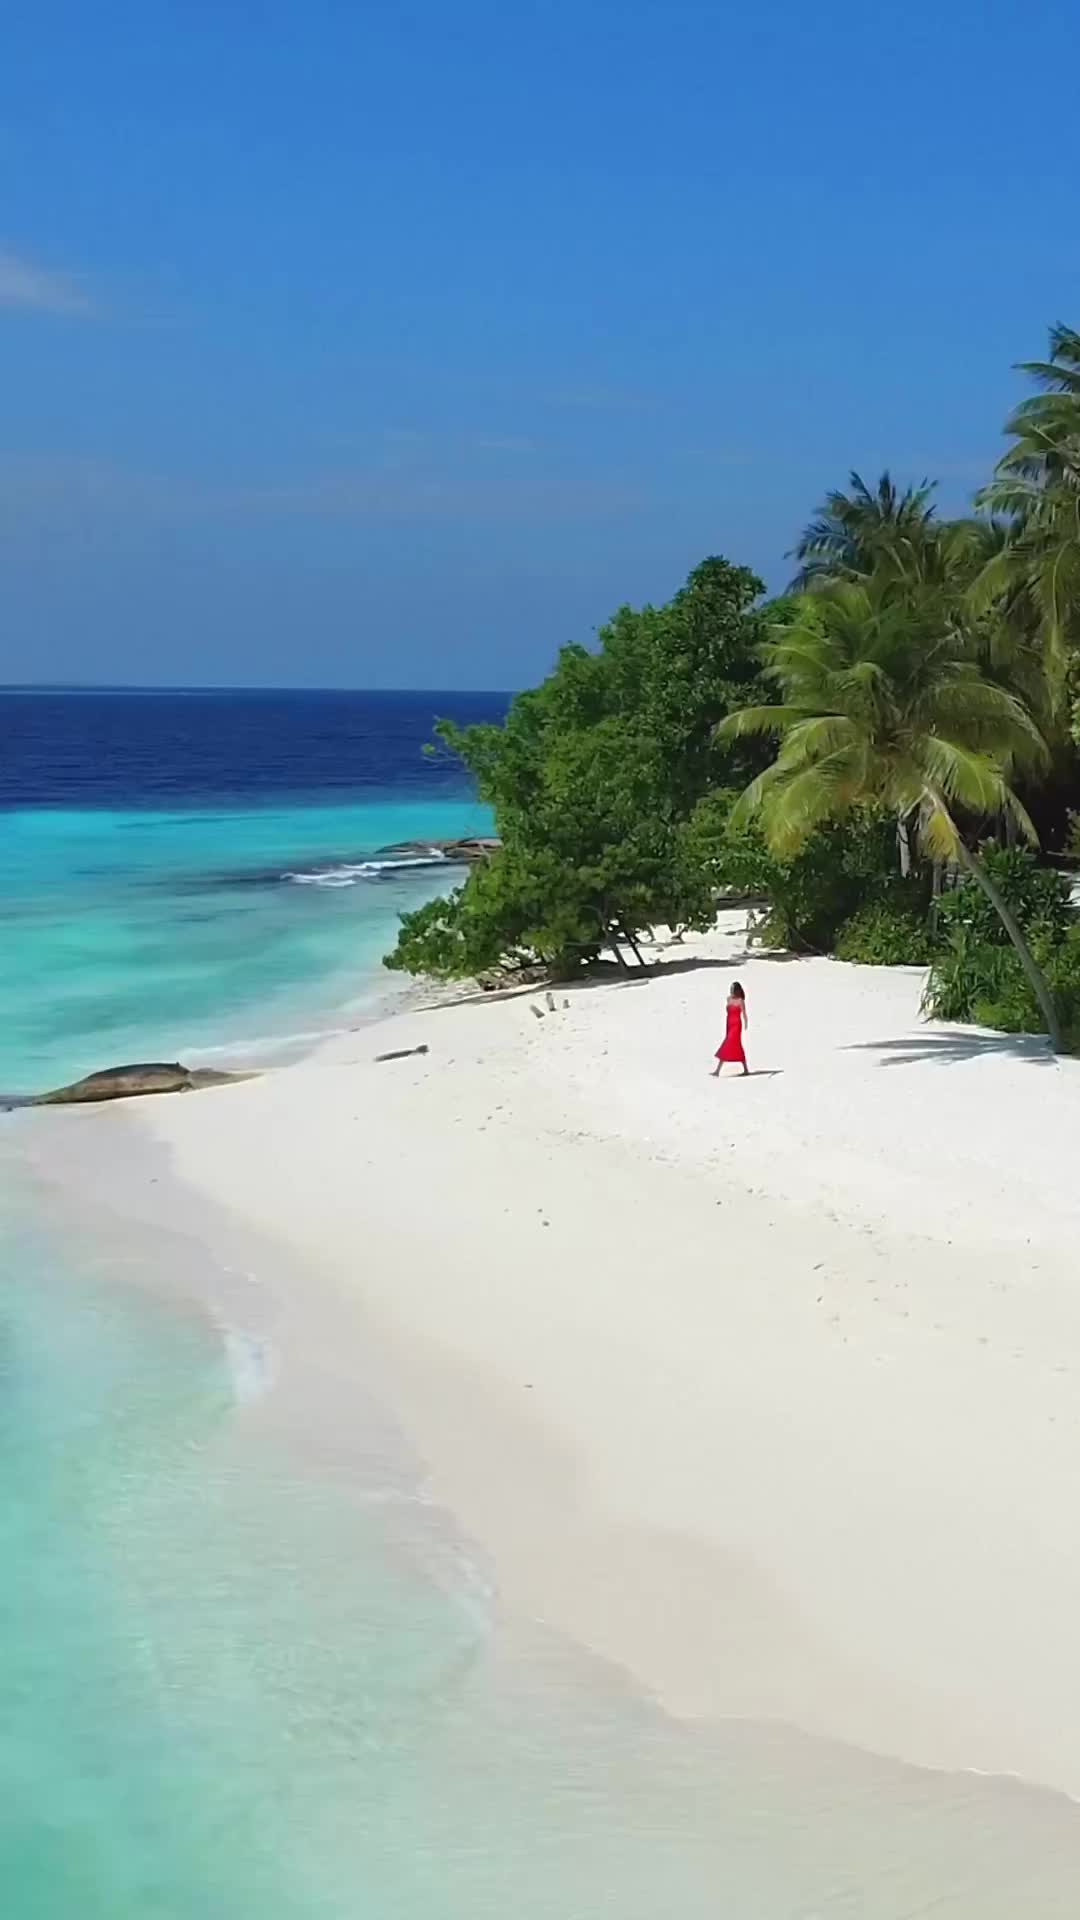 #ocean #sea #beach #island #nature #maldives  #maldivesislands #maldiveslovers #maldivesmania #maldivesinsider #beautiful #beautifuldestinations #vacation #travel #travelgram